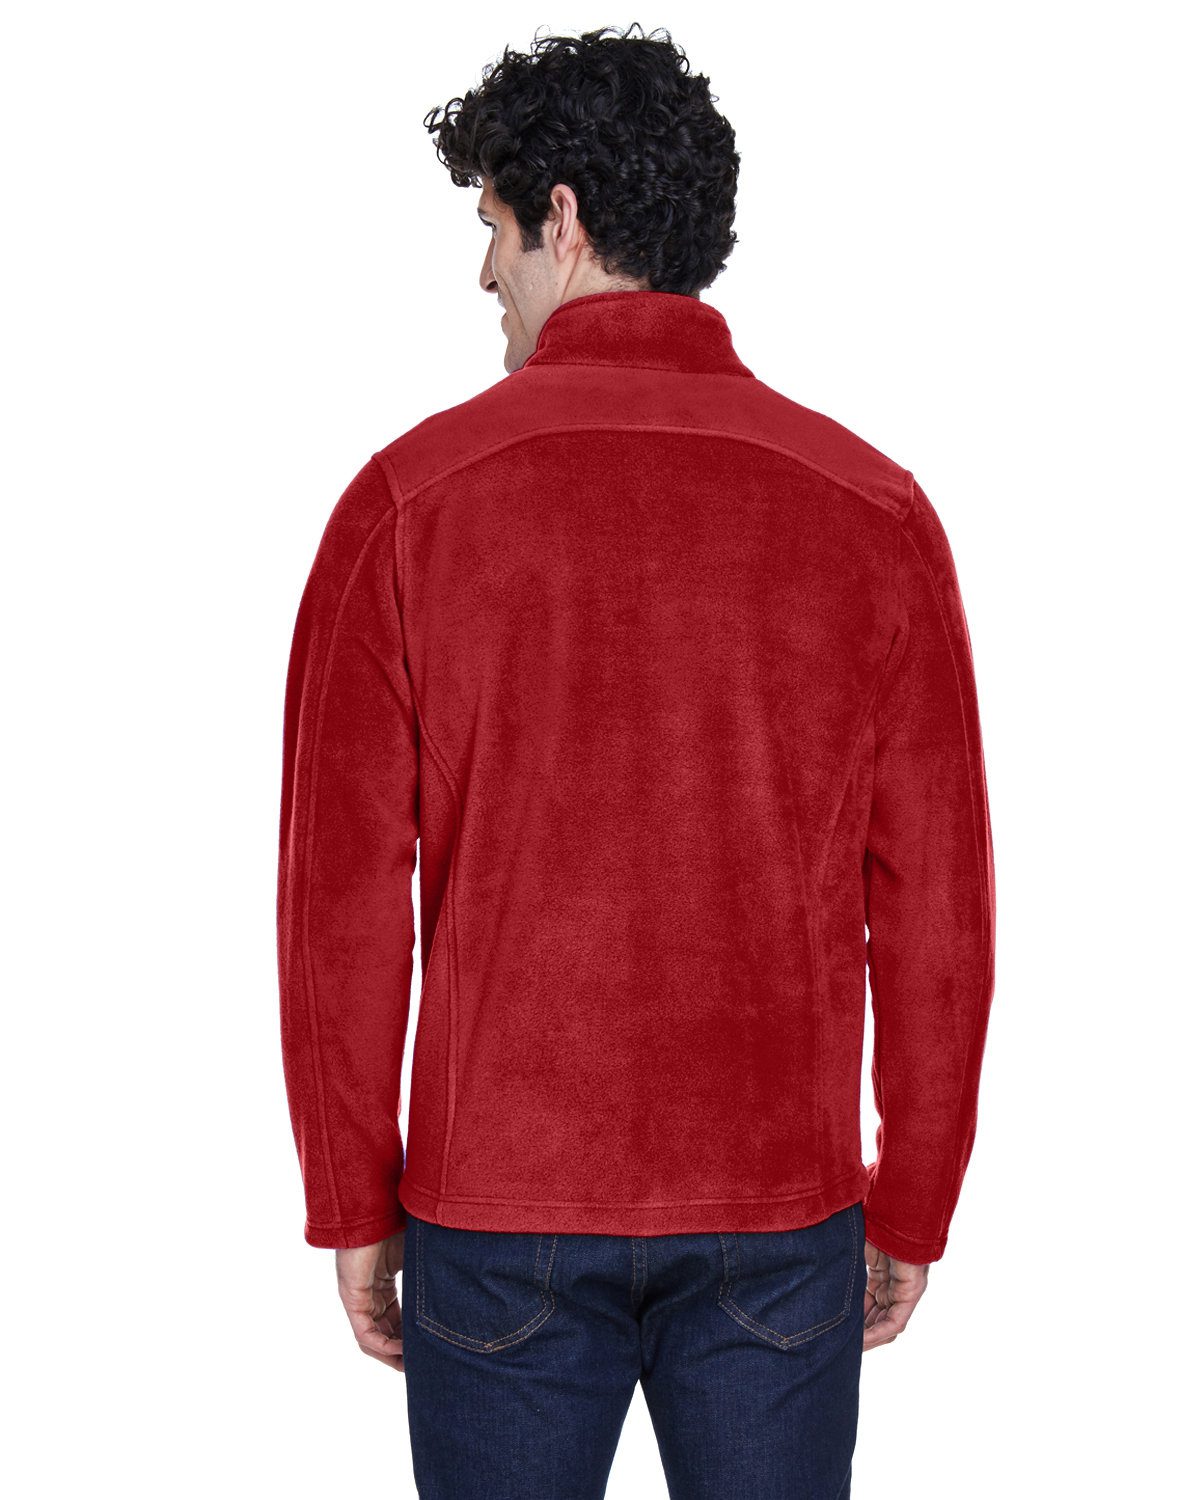 Core 365 Men's Journey Fleece Jacket #88190 Red Back